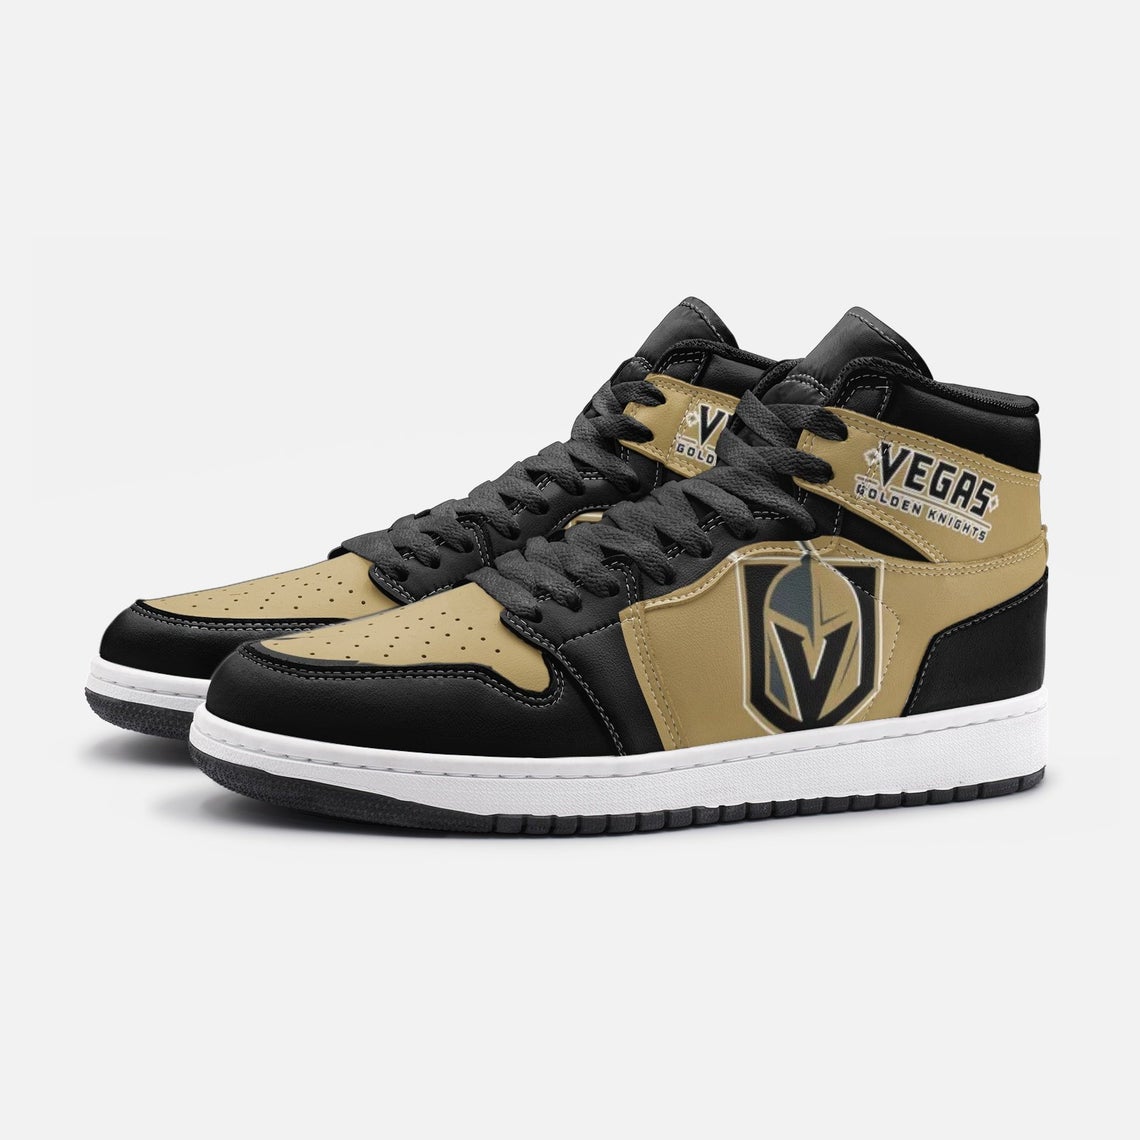 Vegas Golden Knights CUSTOM Air Jordan 1 Shoes -  Worldwide  Shipping